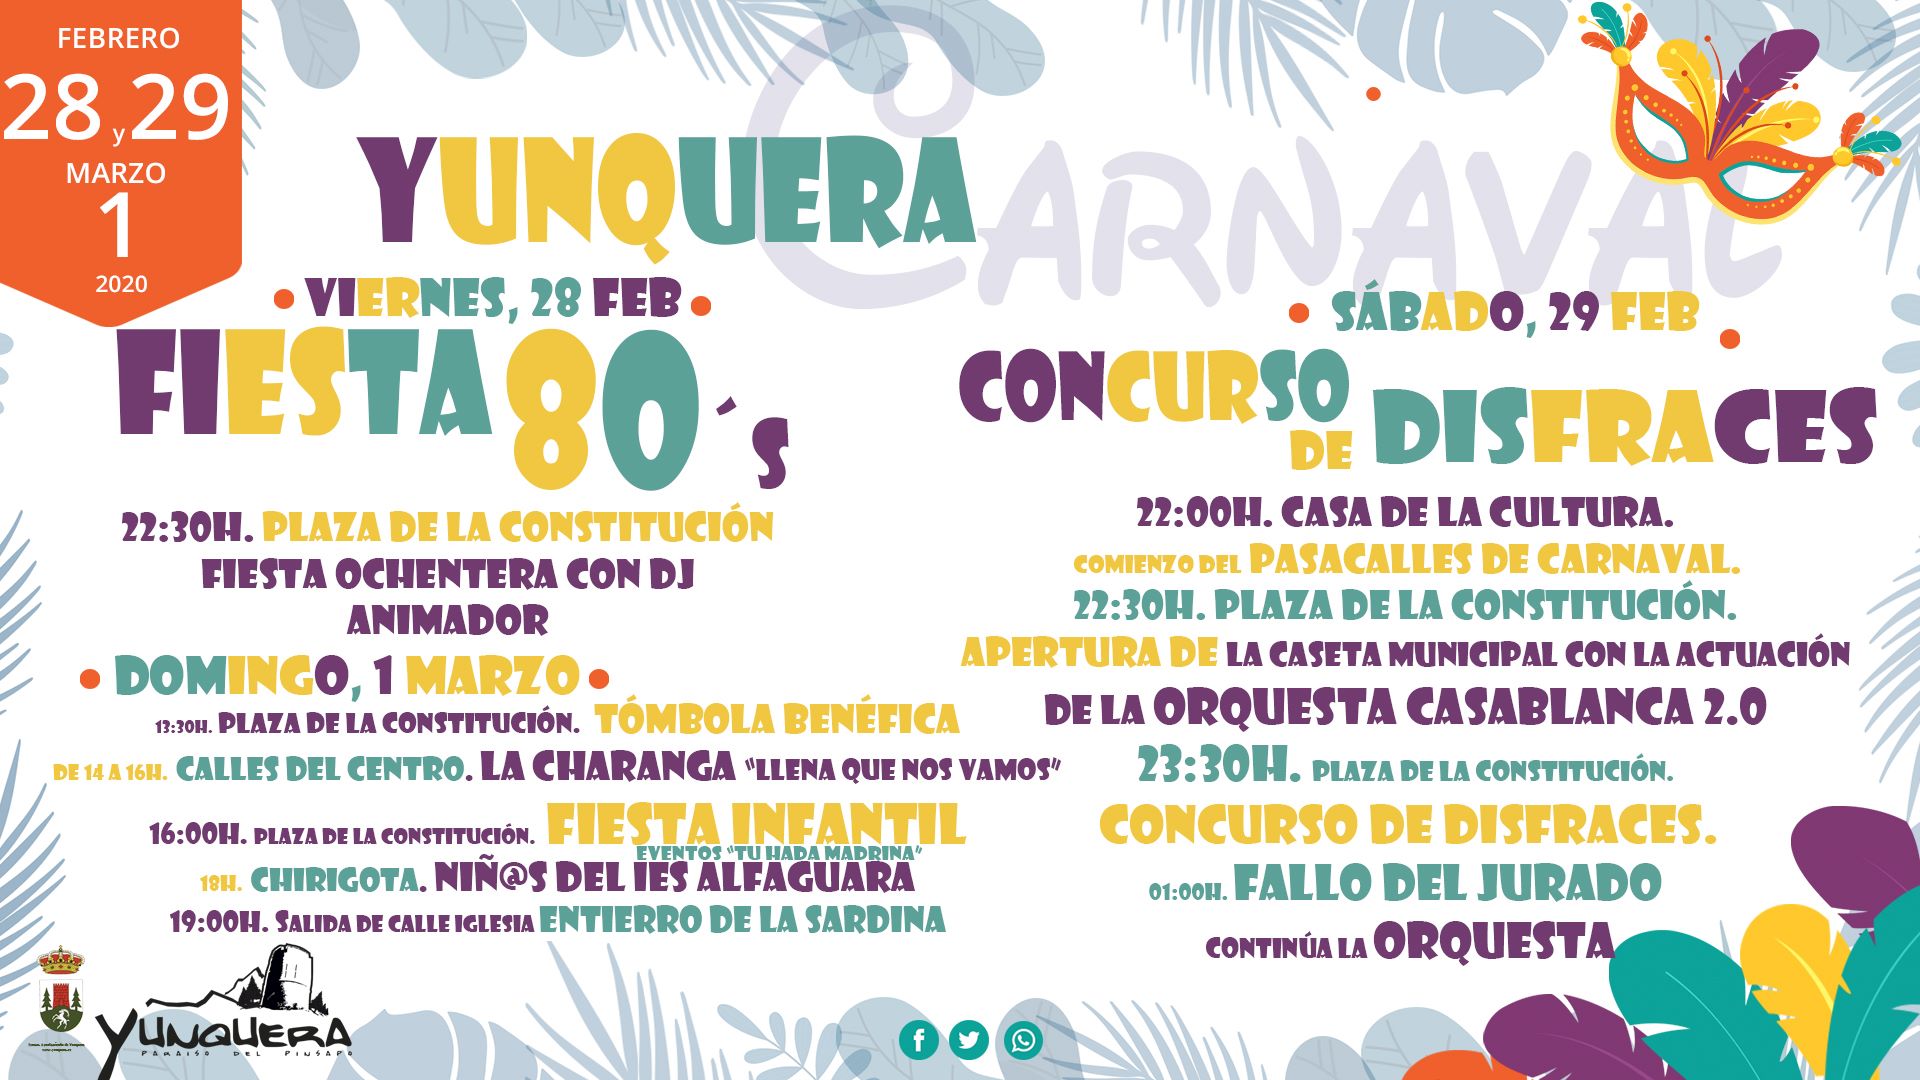 Carnaval 2020 - Yunquera (Málaga)